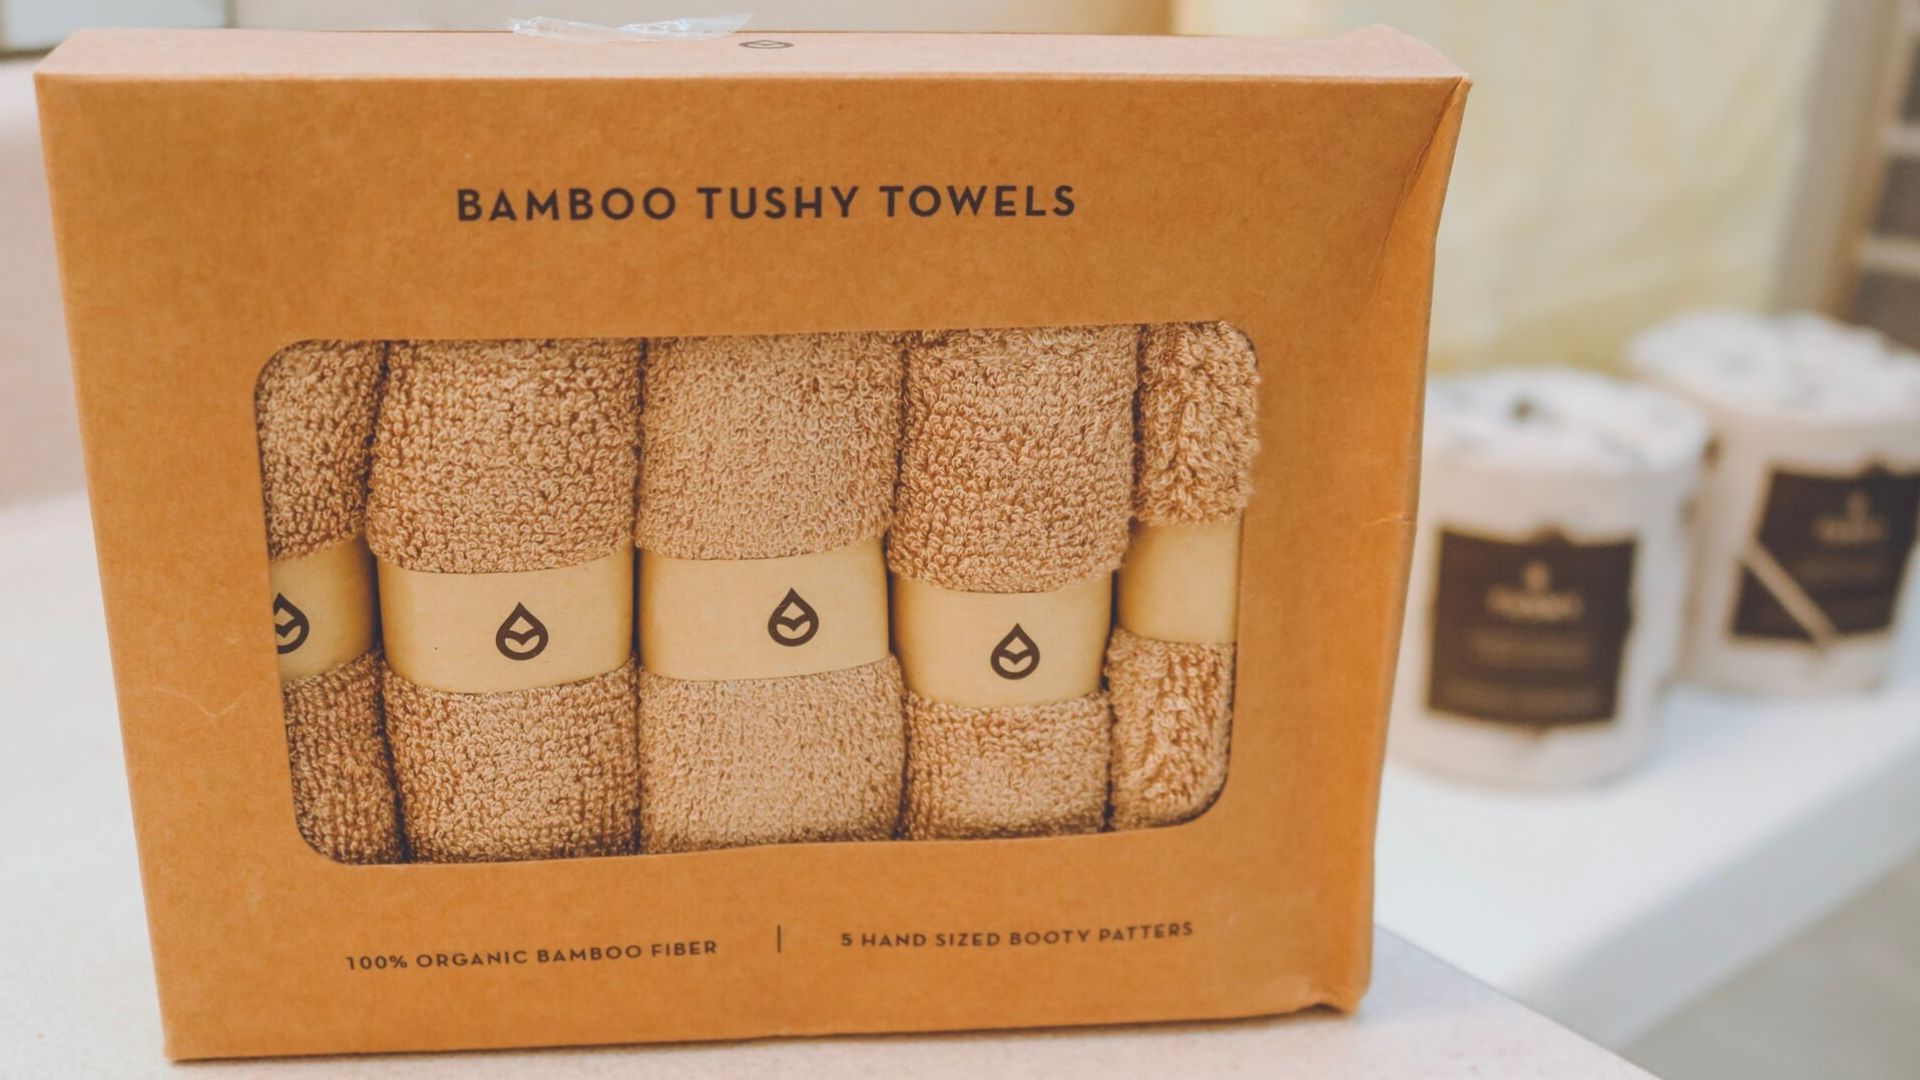 Bamboo Tushy Towels